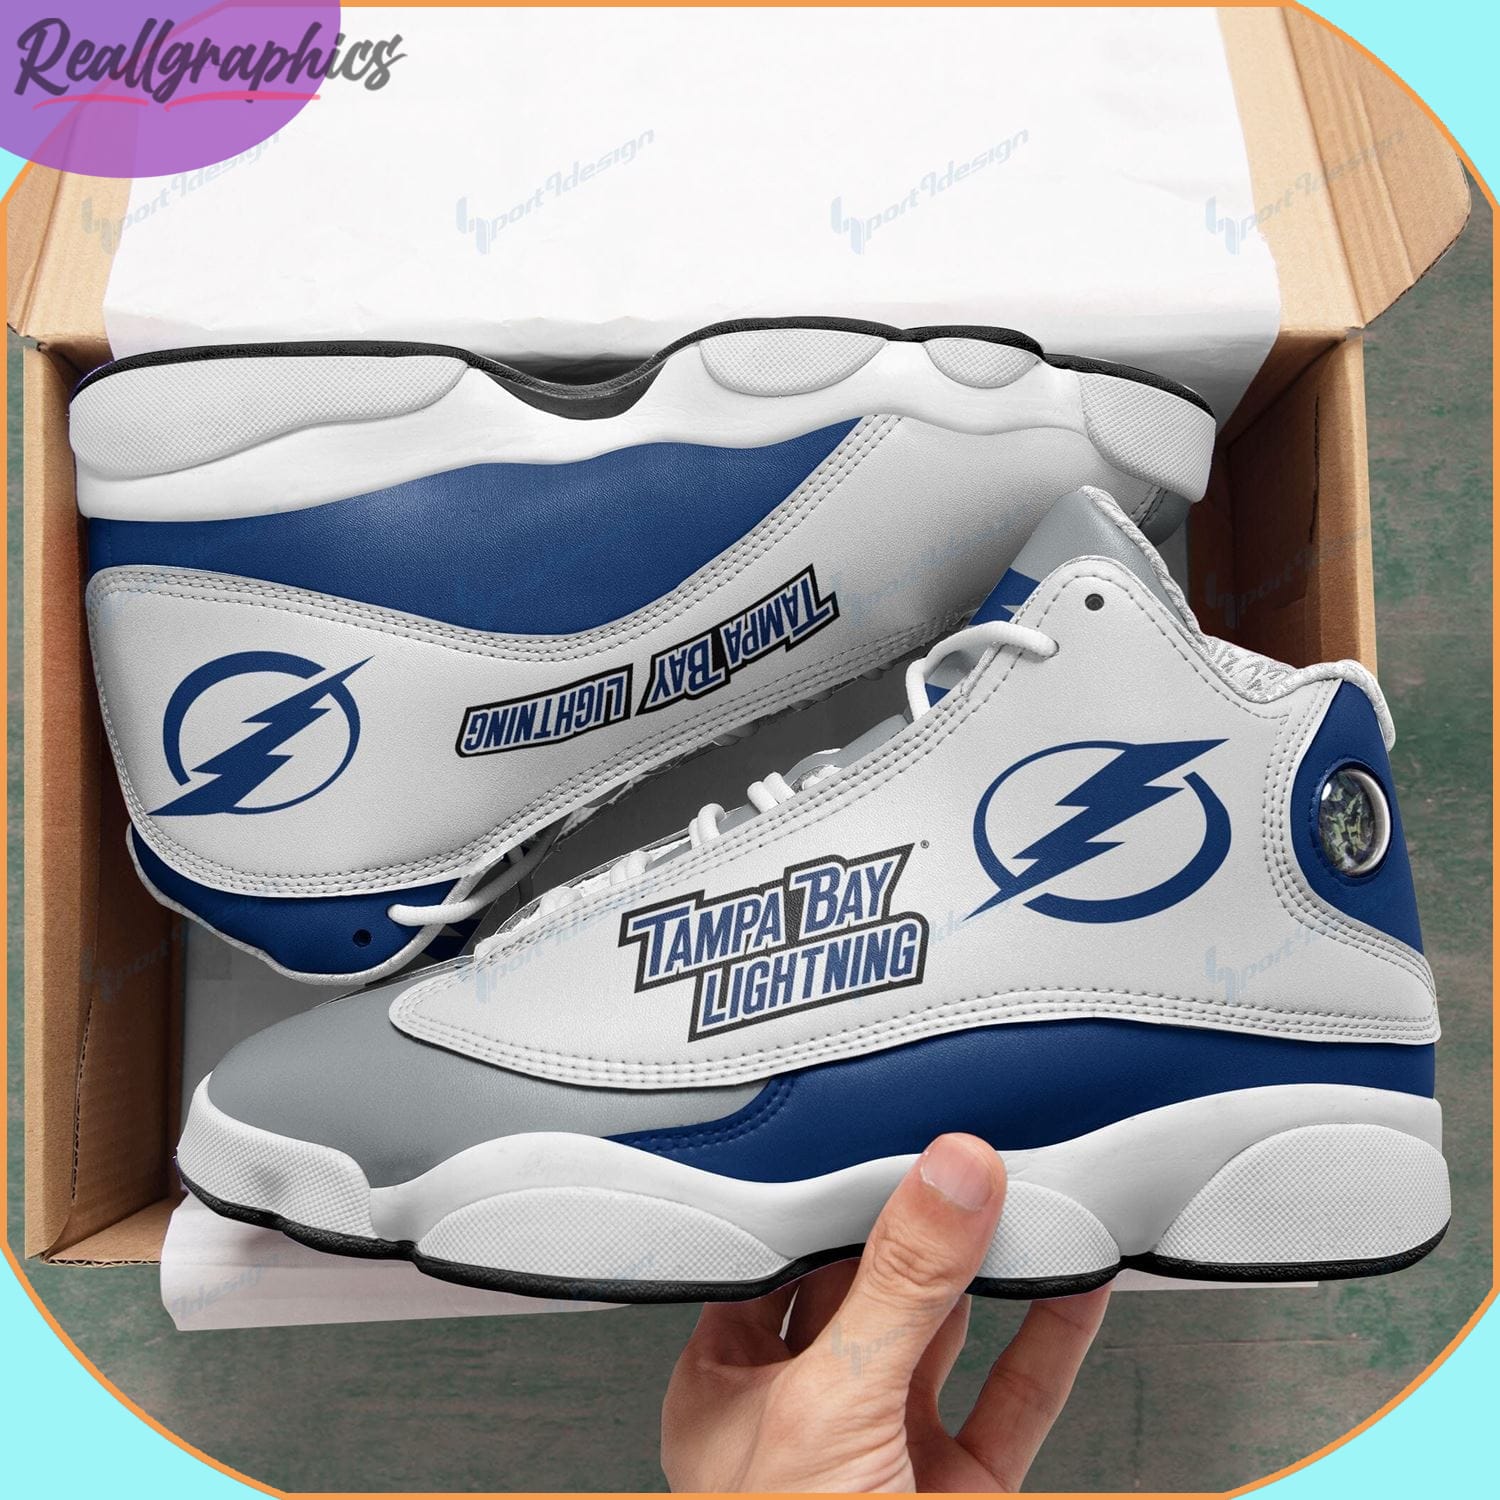 Carolina Panthers Thunder Custom Air Jordan 4 Shoes - Reallgraphics